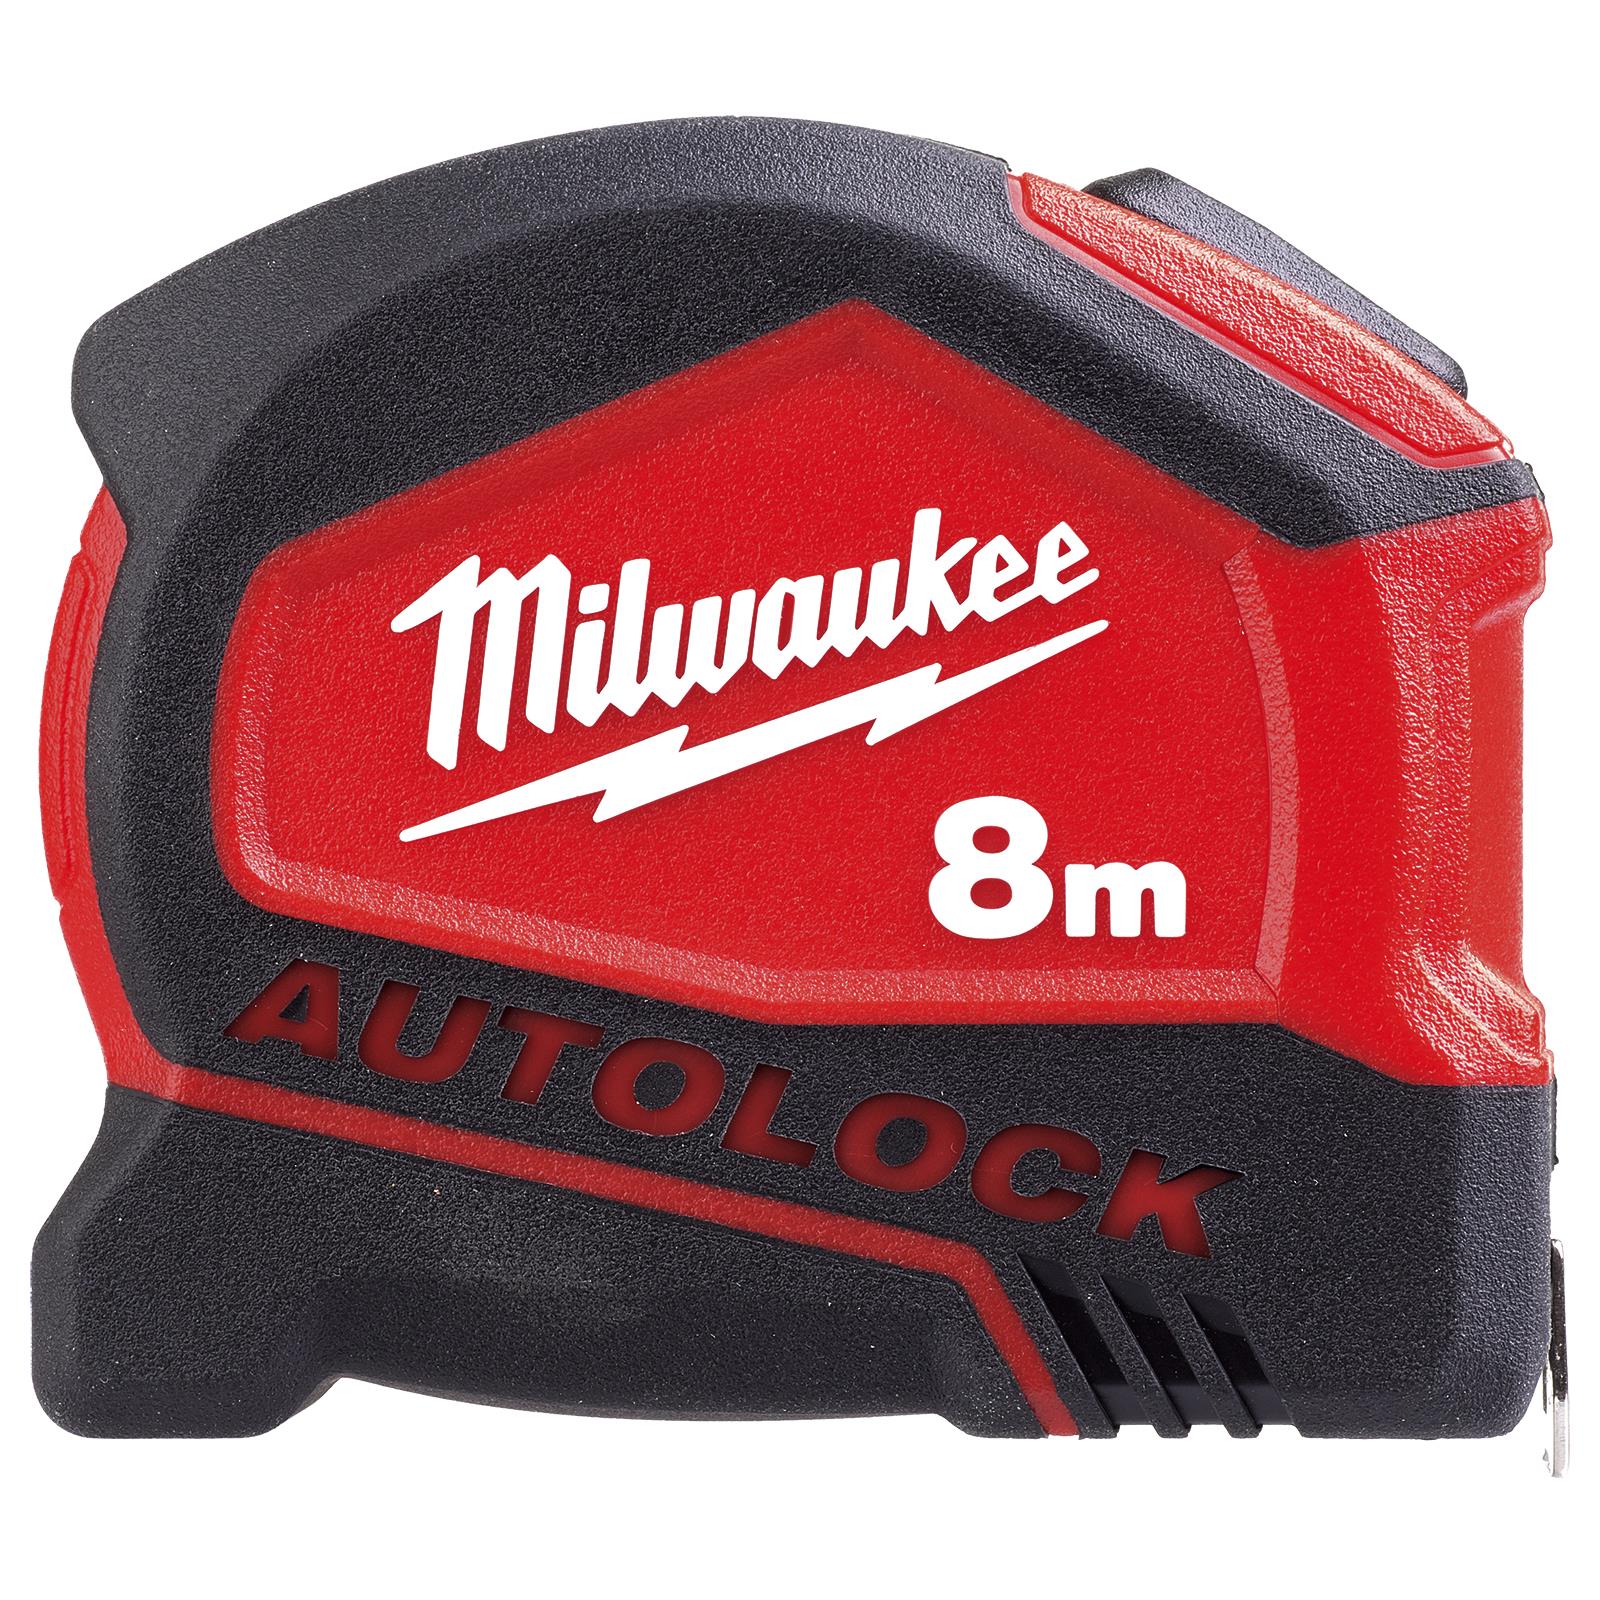 Milwaukee Tape Measure 8m 26ft Metric Imperial Autolock 25mm Blade Width